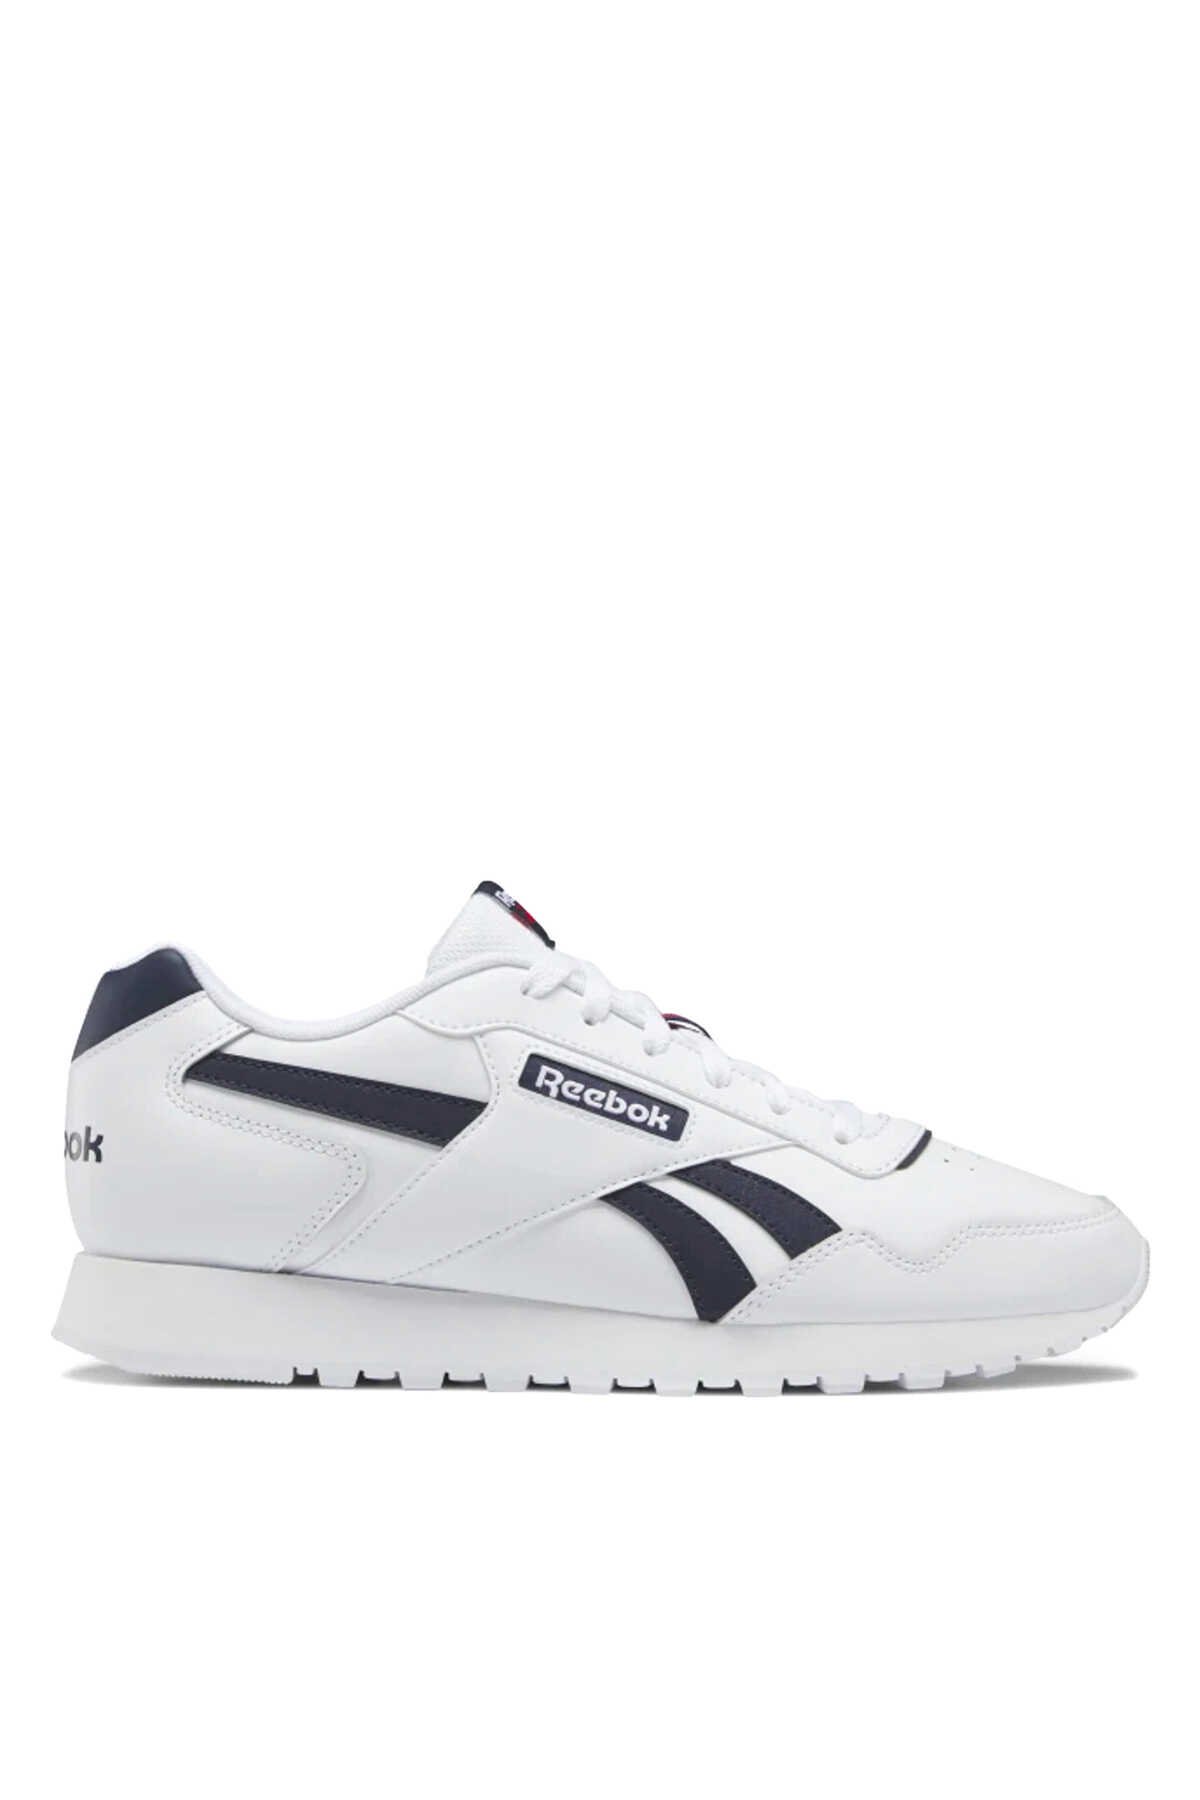 Reebok - Reebok GLIDE Sneaker Unisex Ayakkabı Beyaz_0